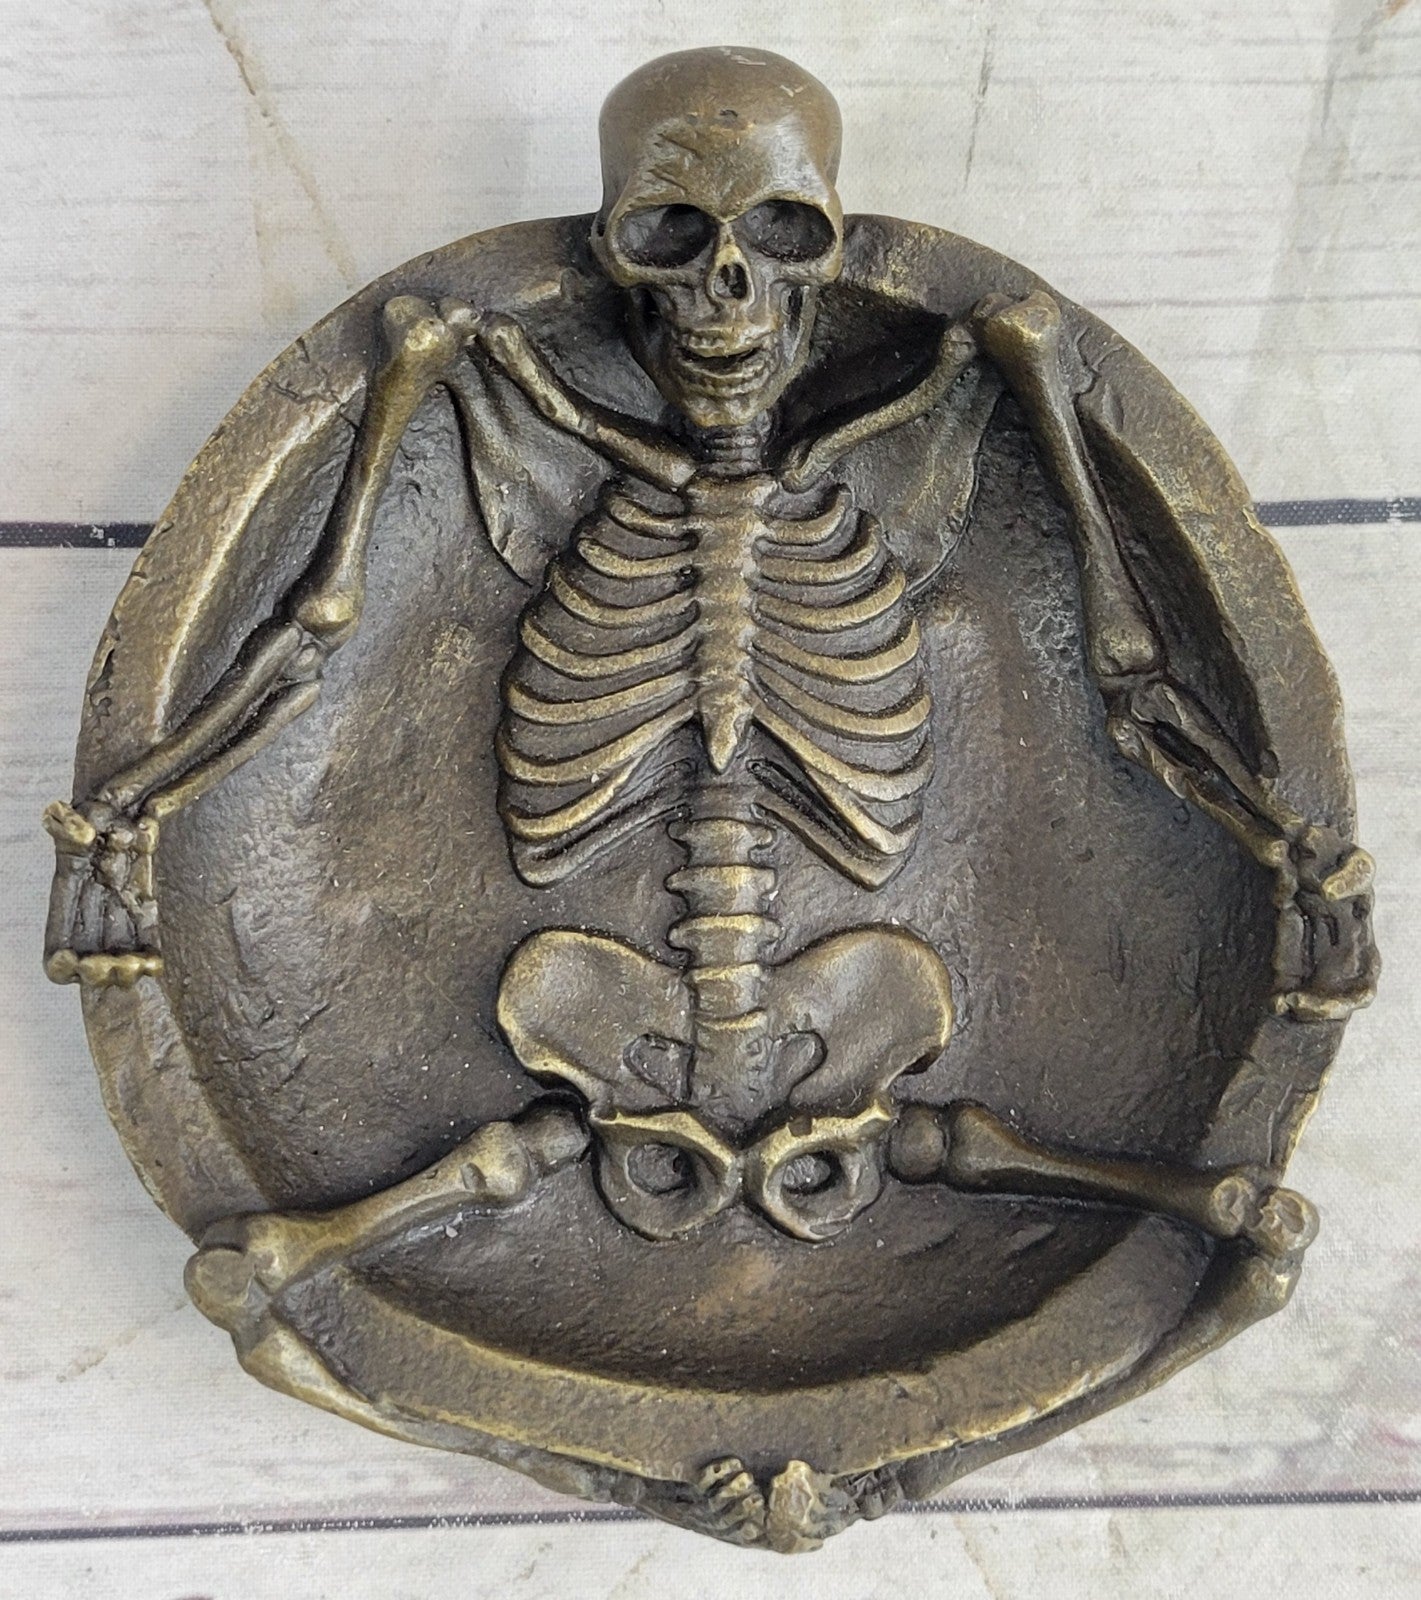 Handcrafted bronze sculpture SALE Asht From Emerges Skeleton Full Original Sign